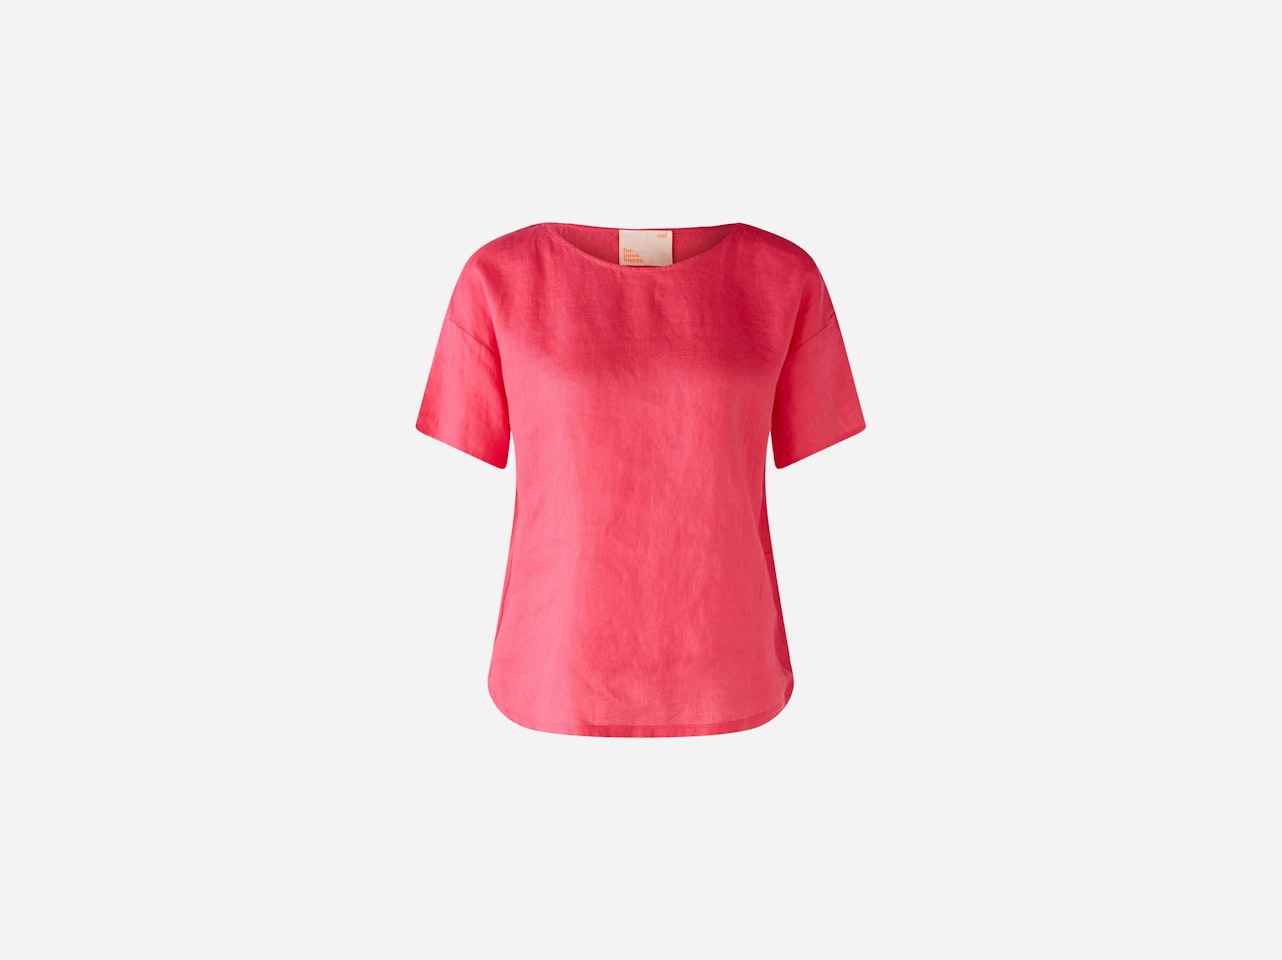 Bild 1 von Linen blouse with jersey patch in raspberry sorbet | Oui